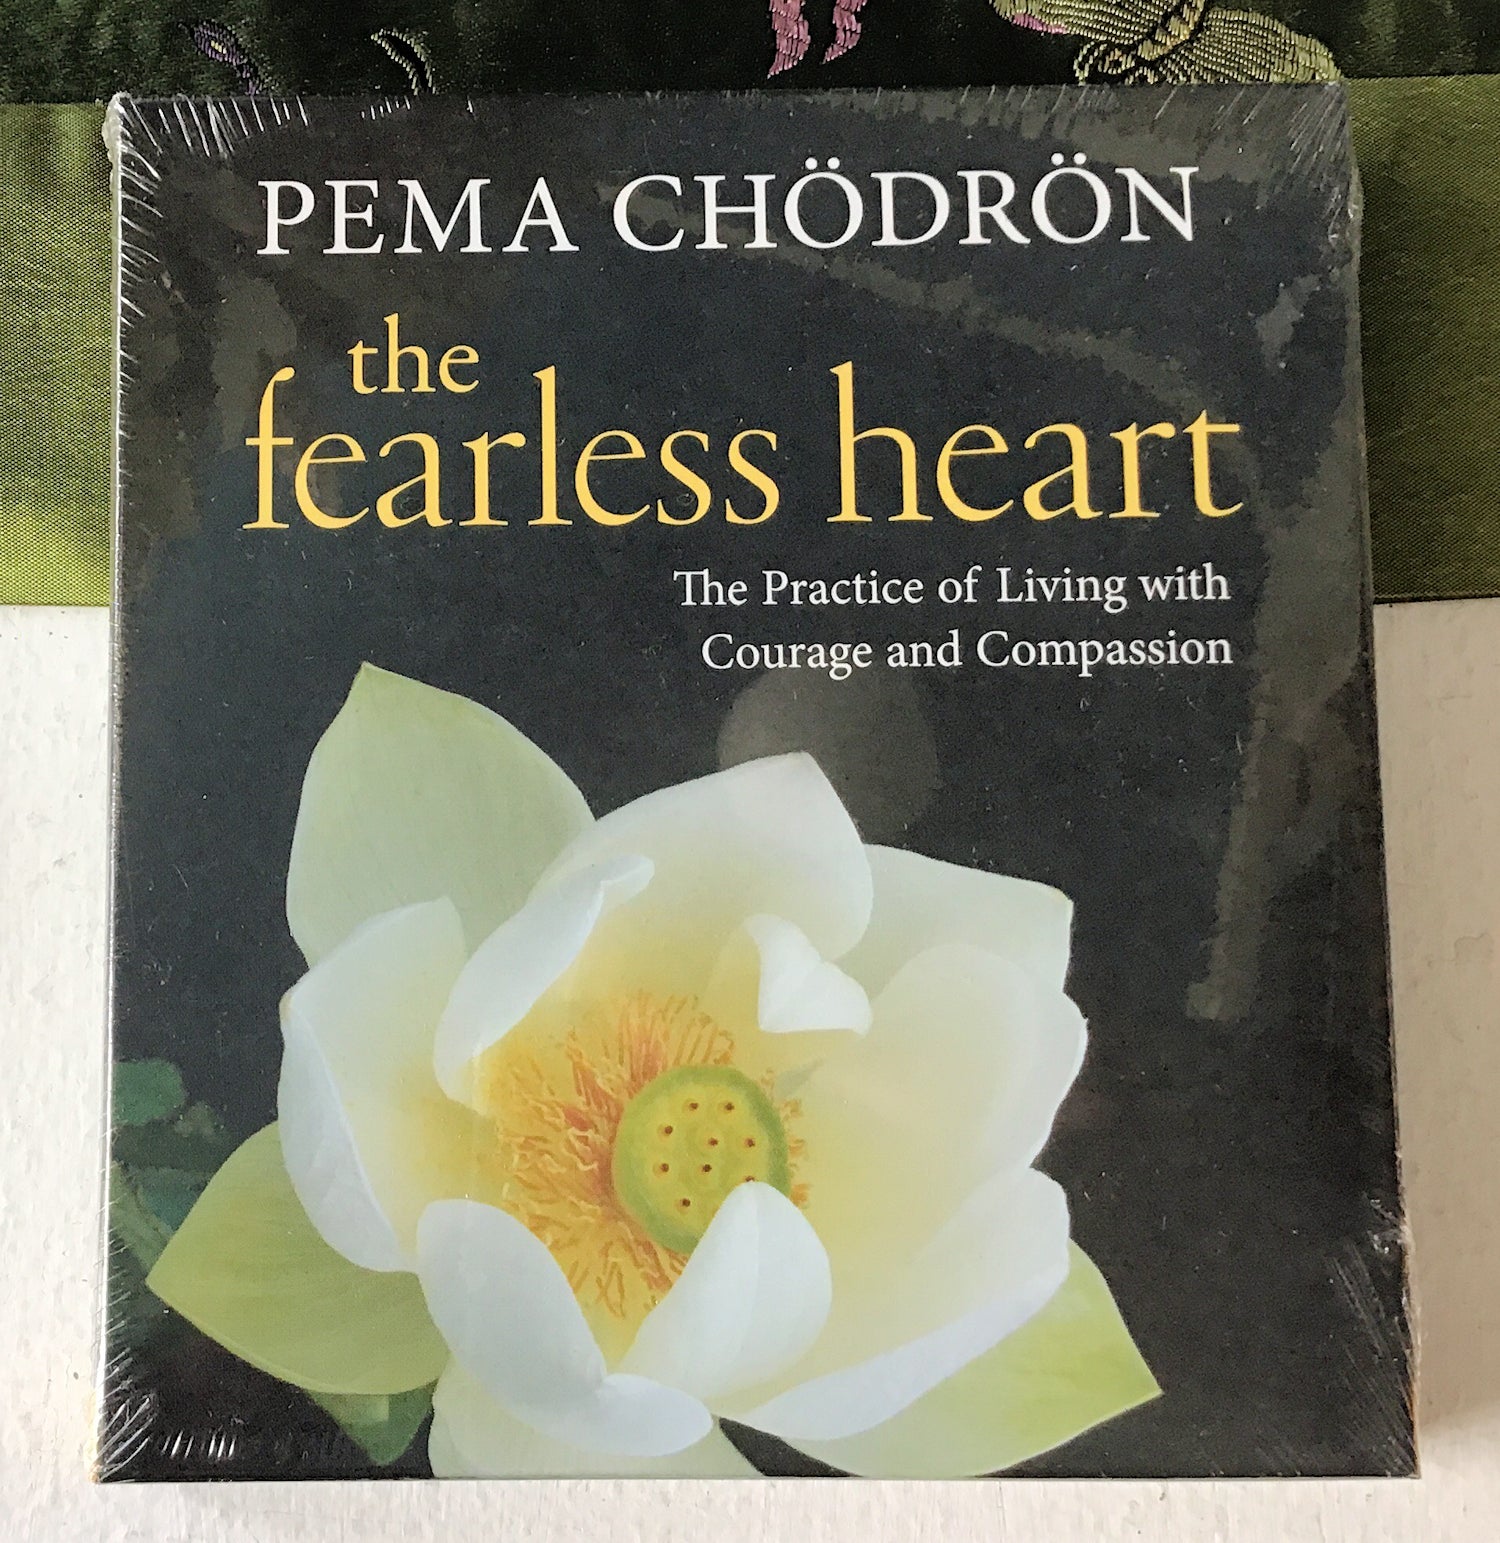 The Fearless Heart: Audio Teachings (CD's) by Pema Chodron